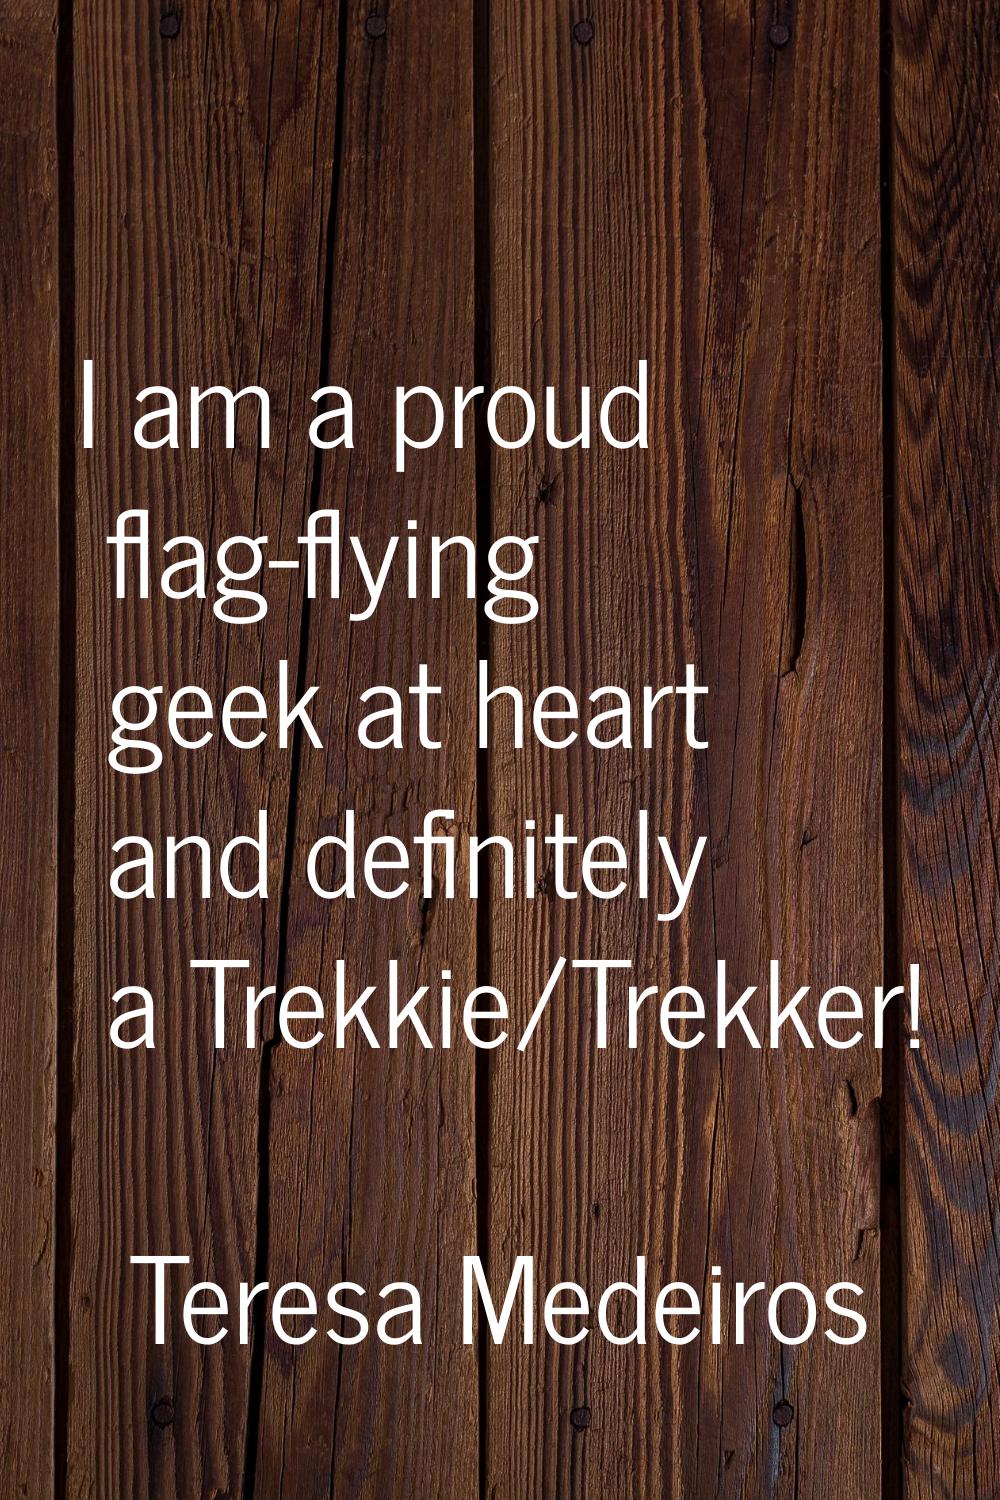 I am a proud flag-flying geek at heart and definitely a Trekkie/Trekker!